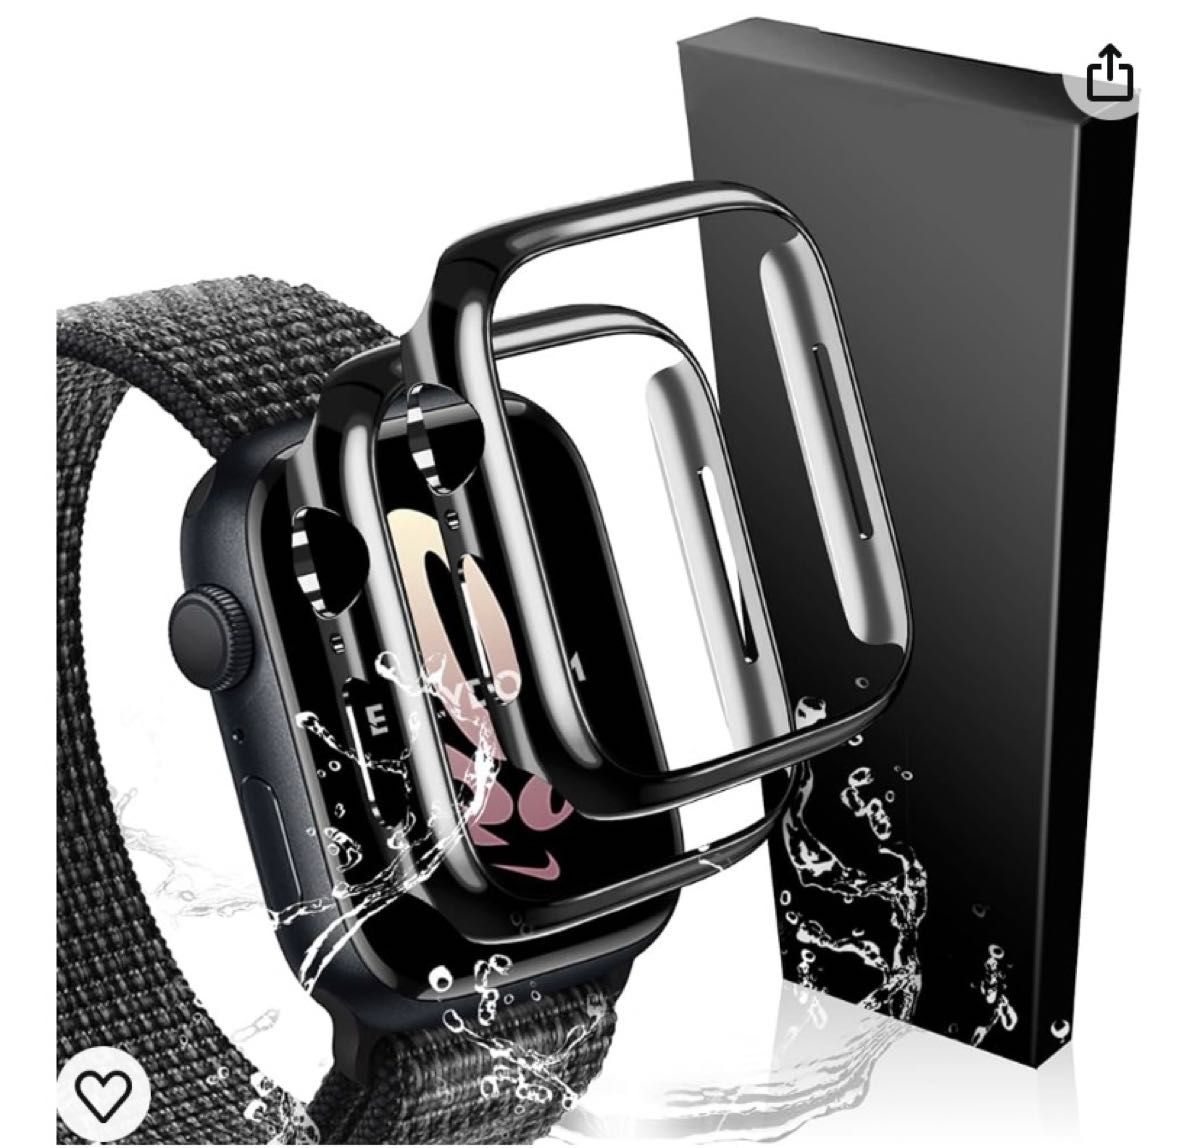 Apple Watch 用 防水ケース 一体感ケース アップルウォッチ シリーズ